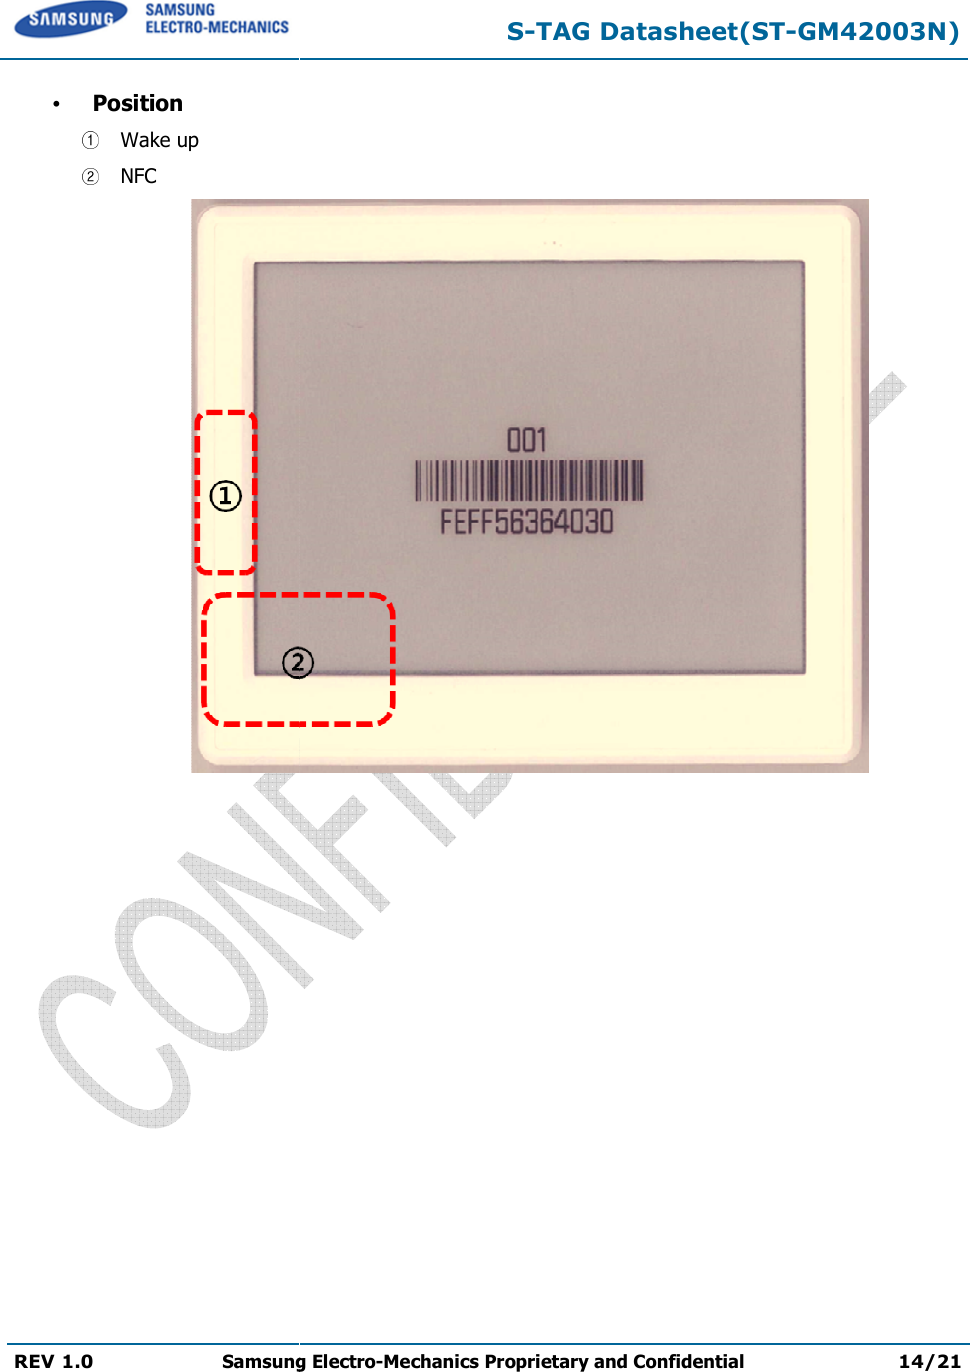   REV 1.0 Samsung Electro   Position  Wake up  NFC  S-TAG Datasheet(STSamsung Electro-Mechanics Proprietary and ConfidentialTAG Datasheet(ST-GM42003N) Proprietary and Confidential 14/21  